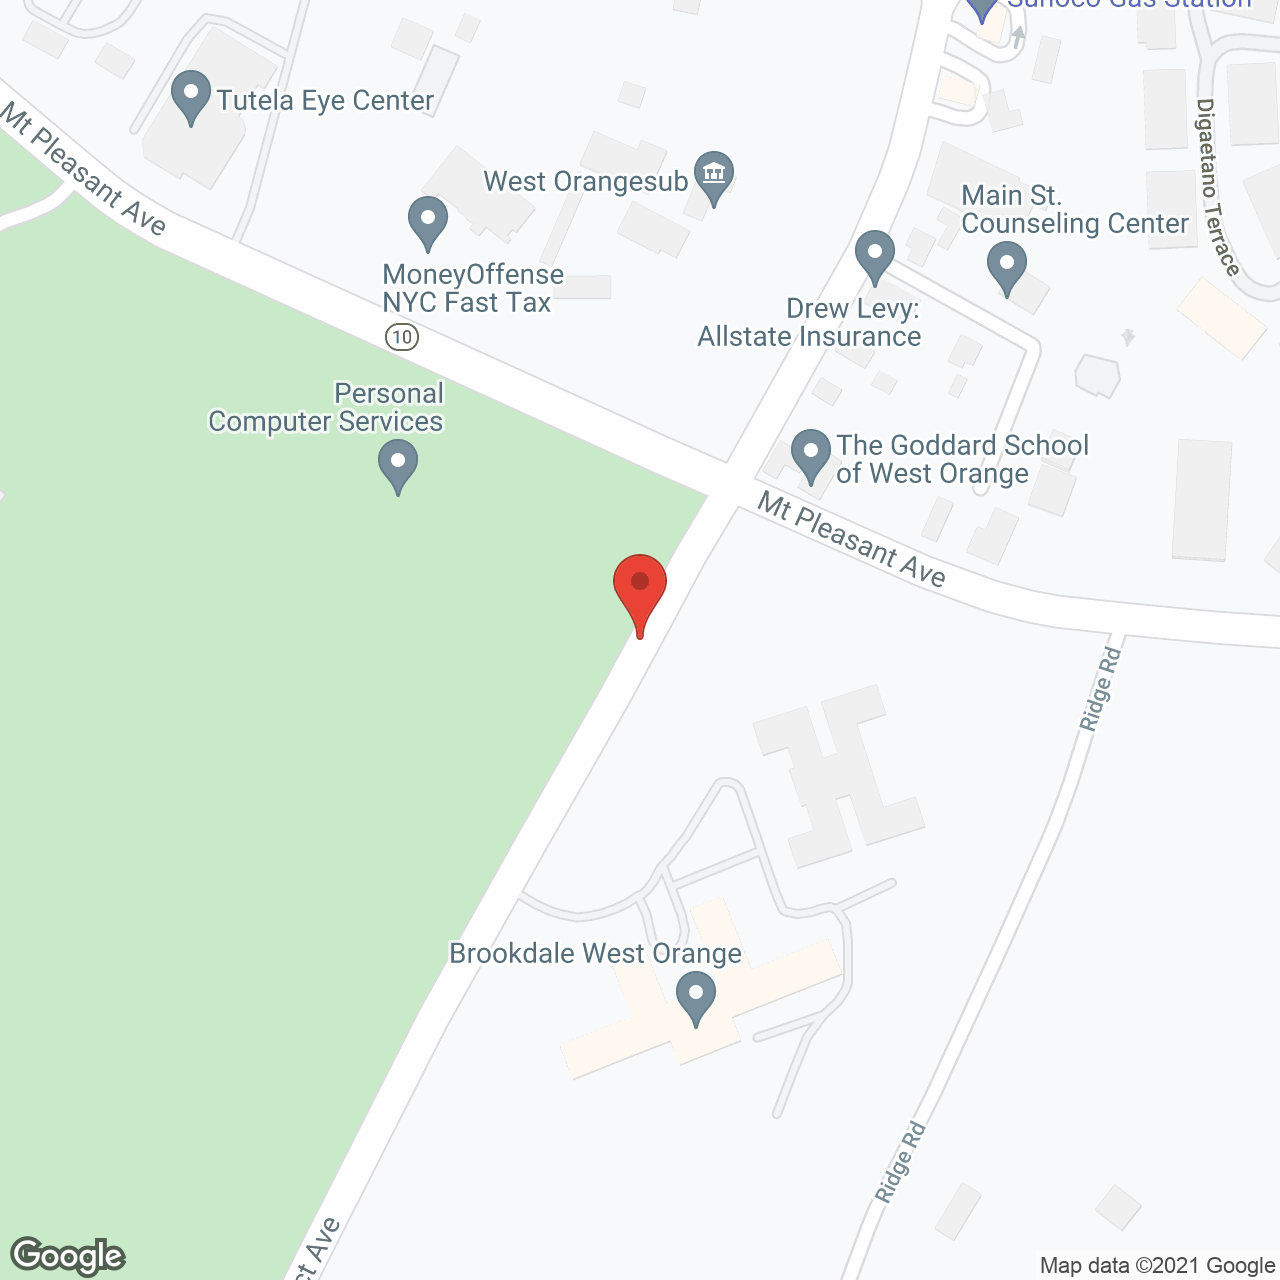 Brookdale West Orange in google map